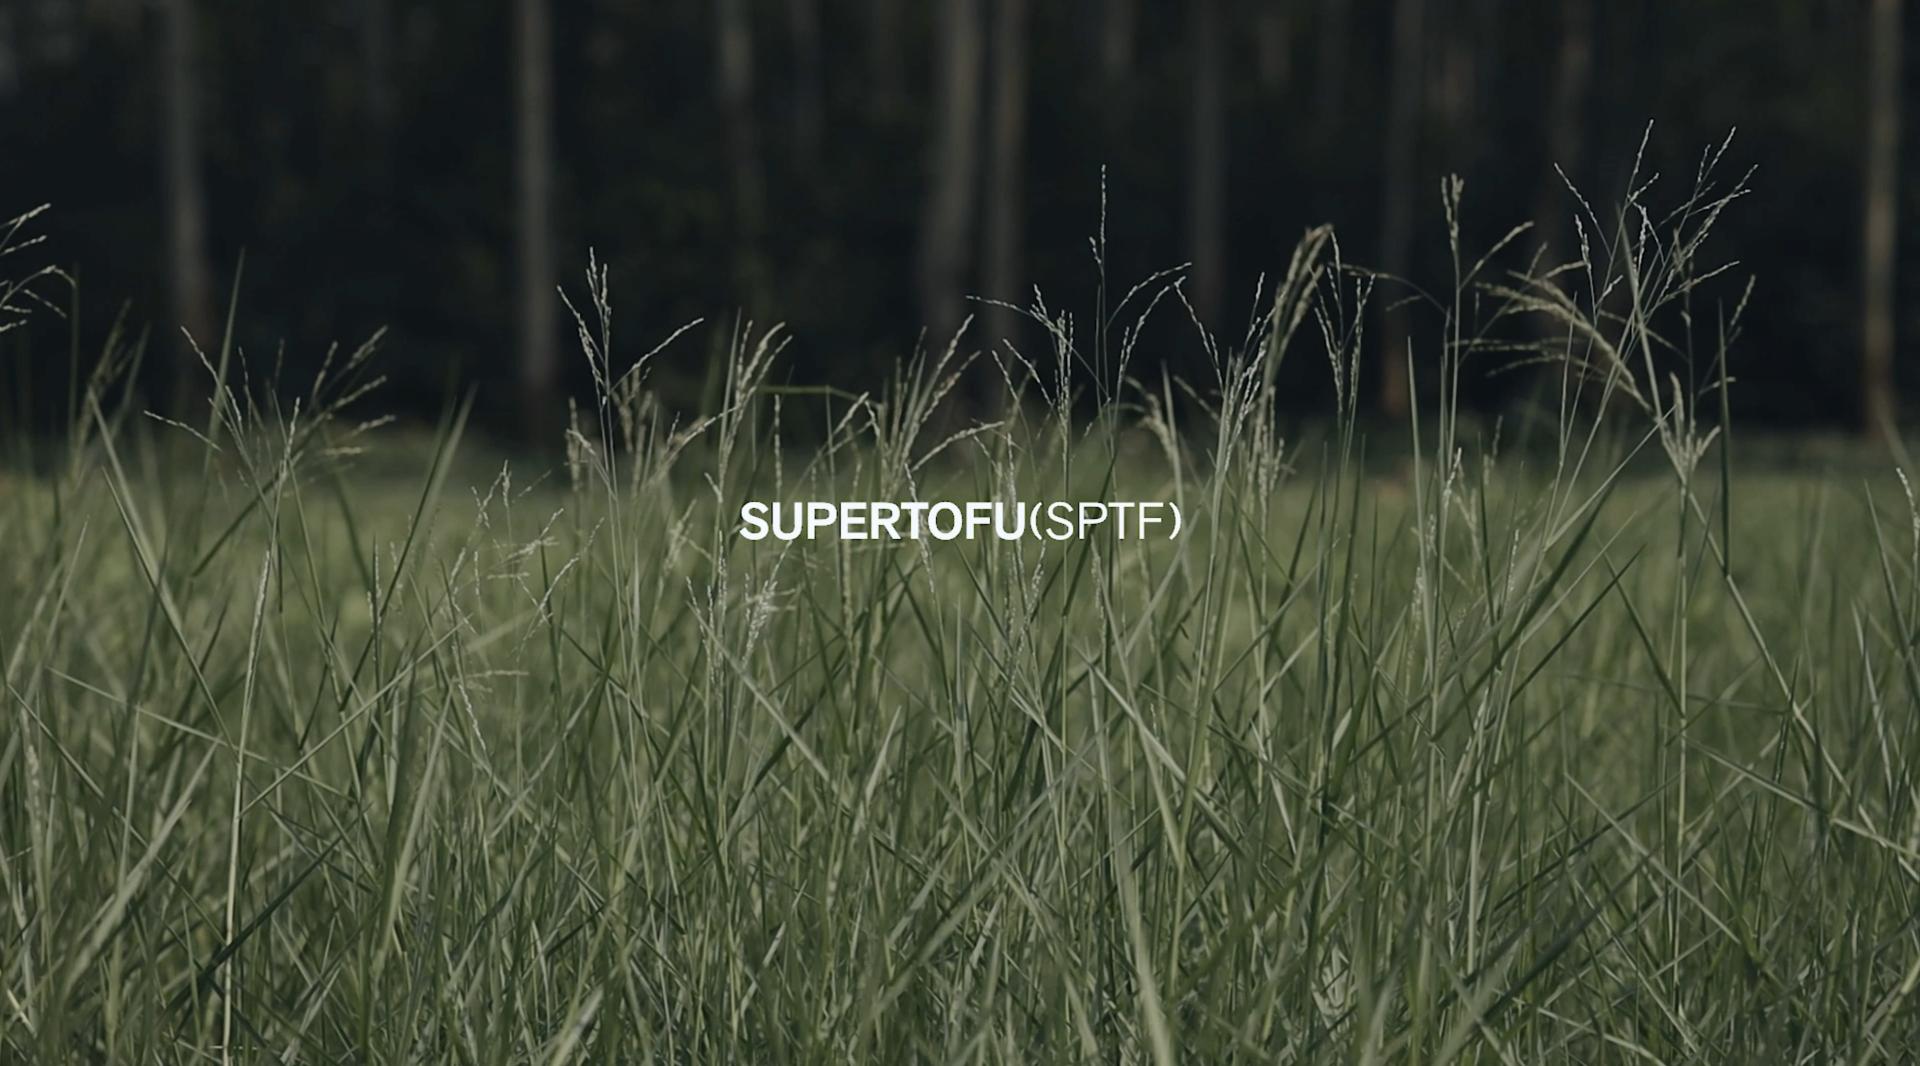 SUPERTOFU 19AW 城市森林 概念视频